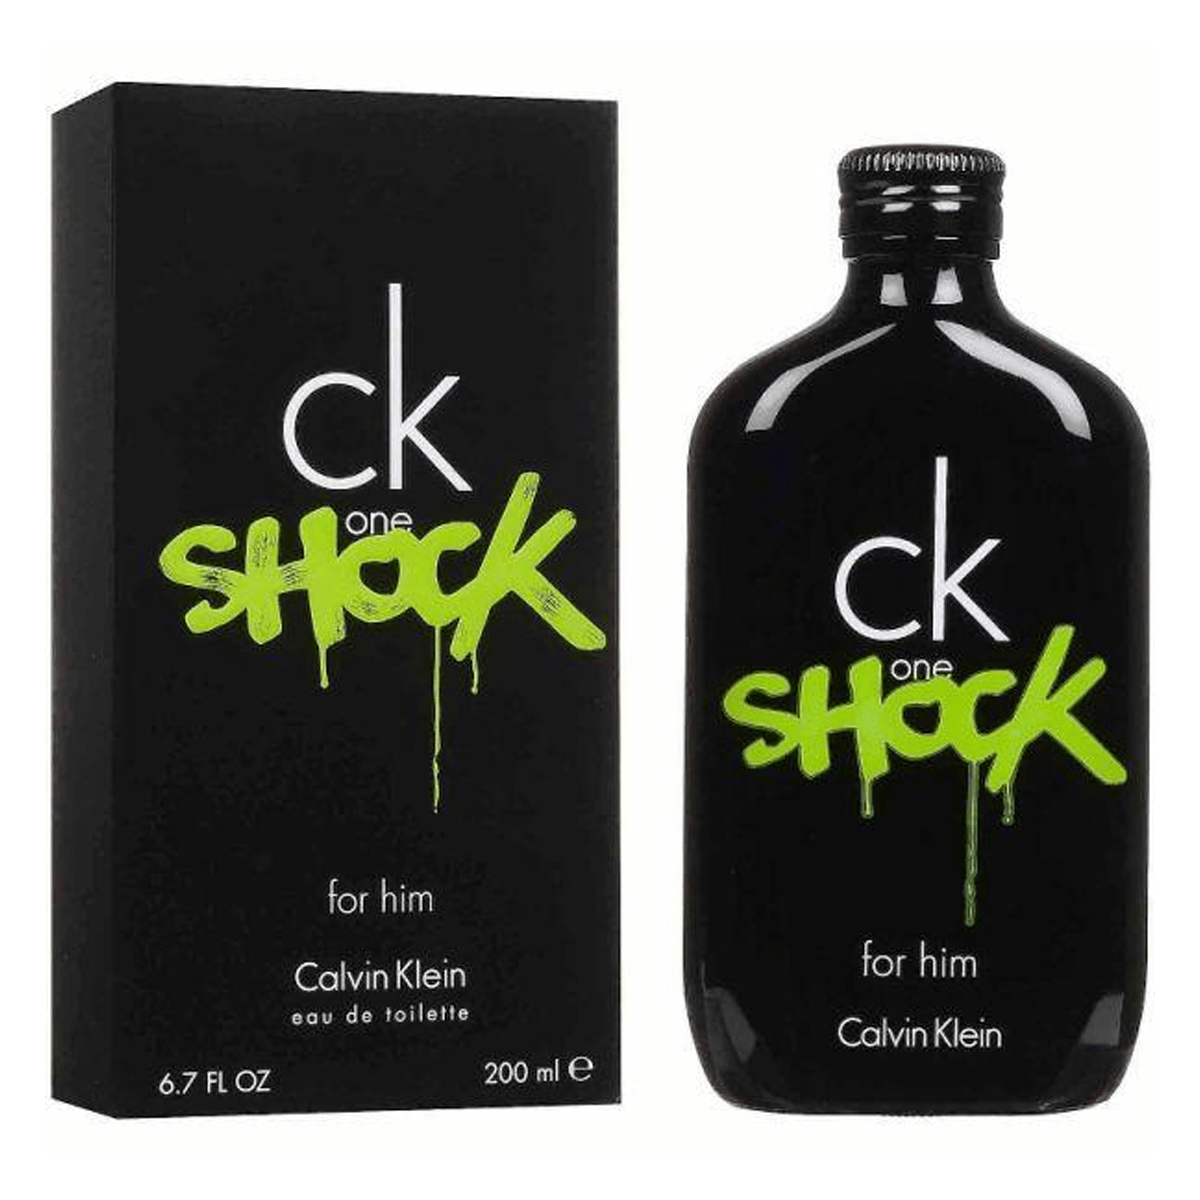 CK One Shock by Calvin Klein for Men - Eau de Toilette, 200ml - SquareDubai